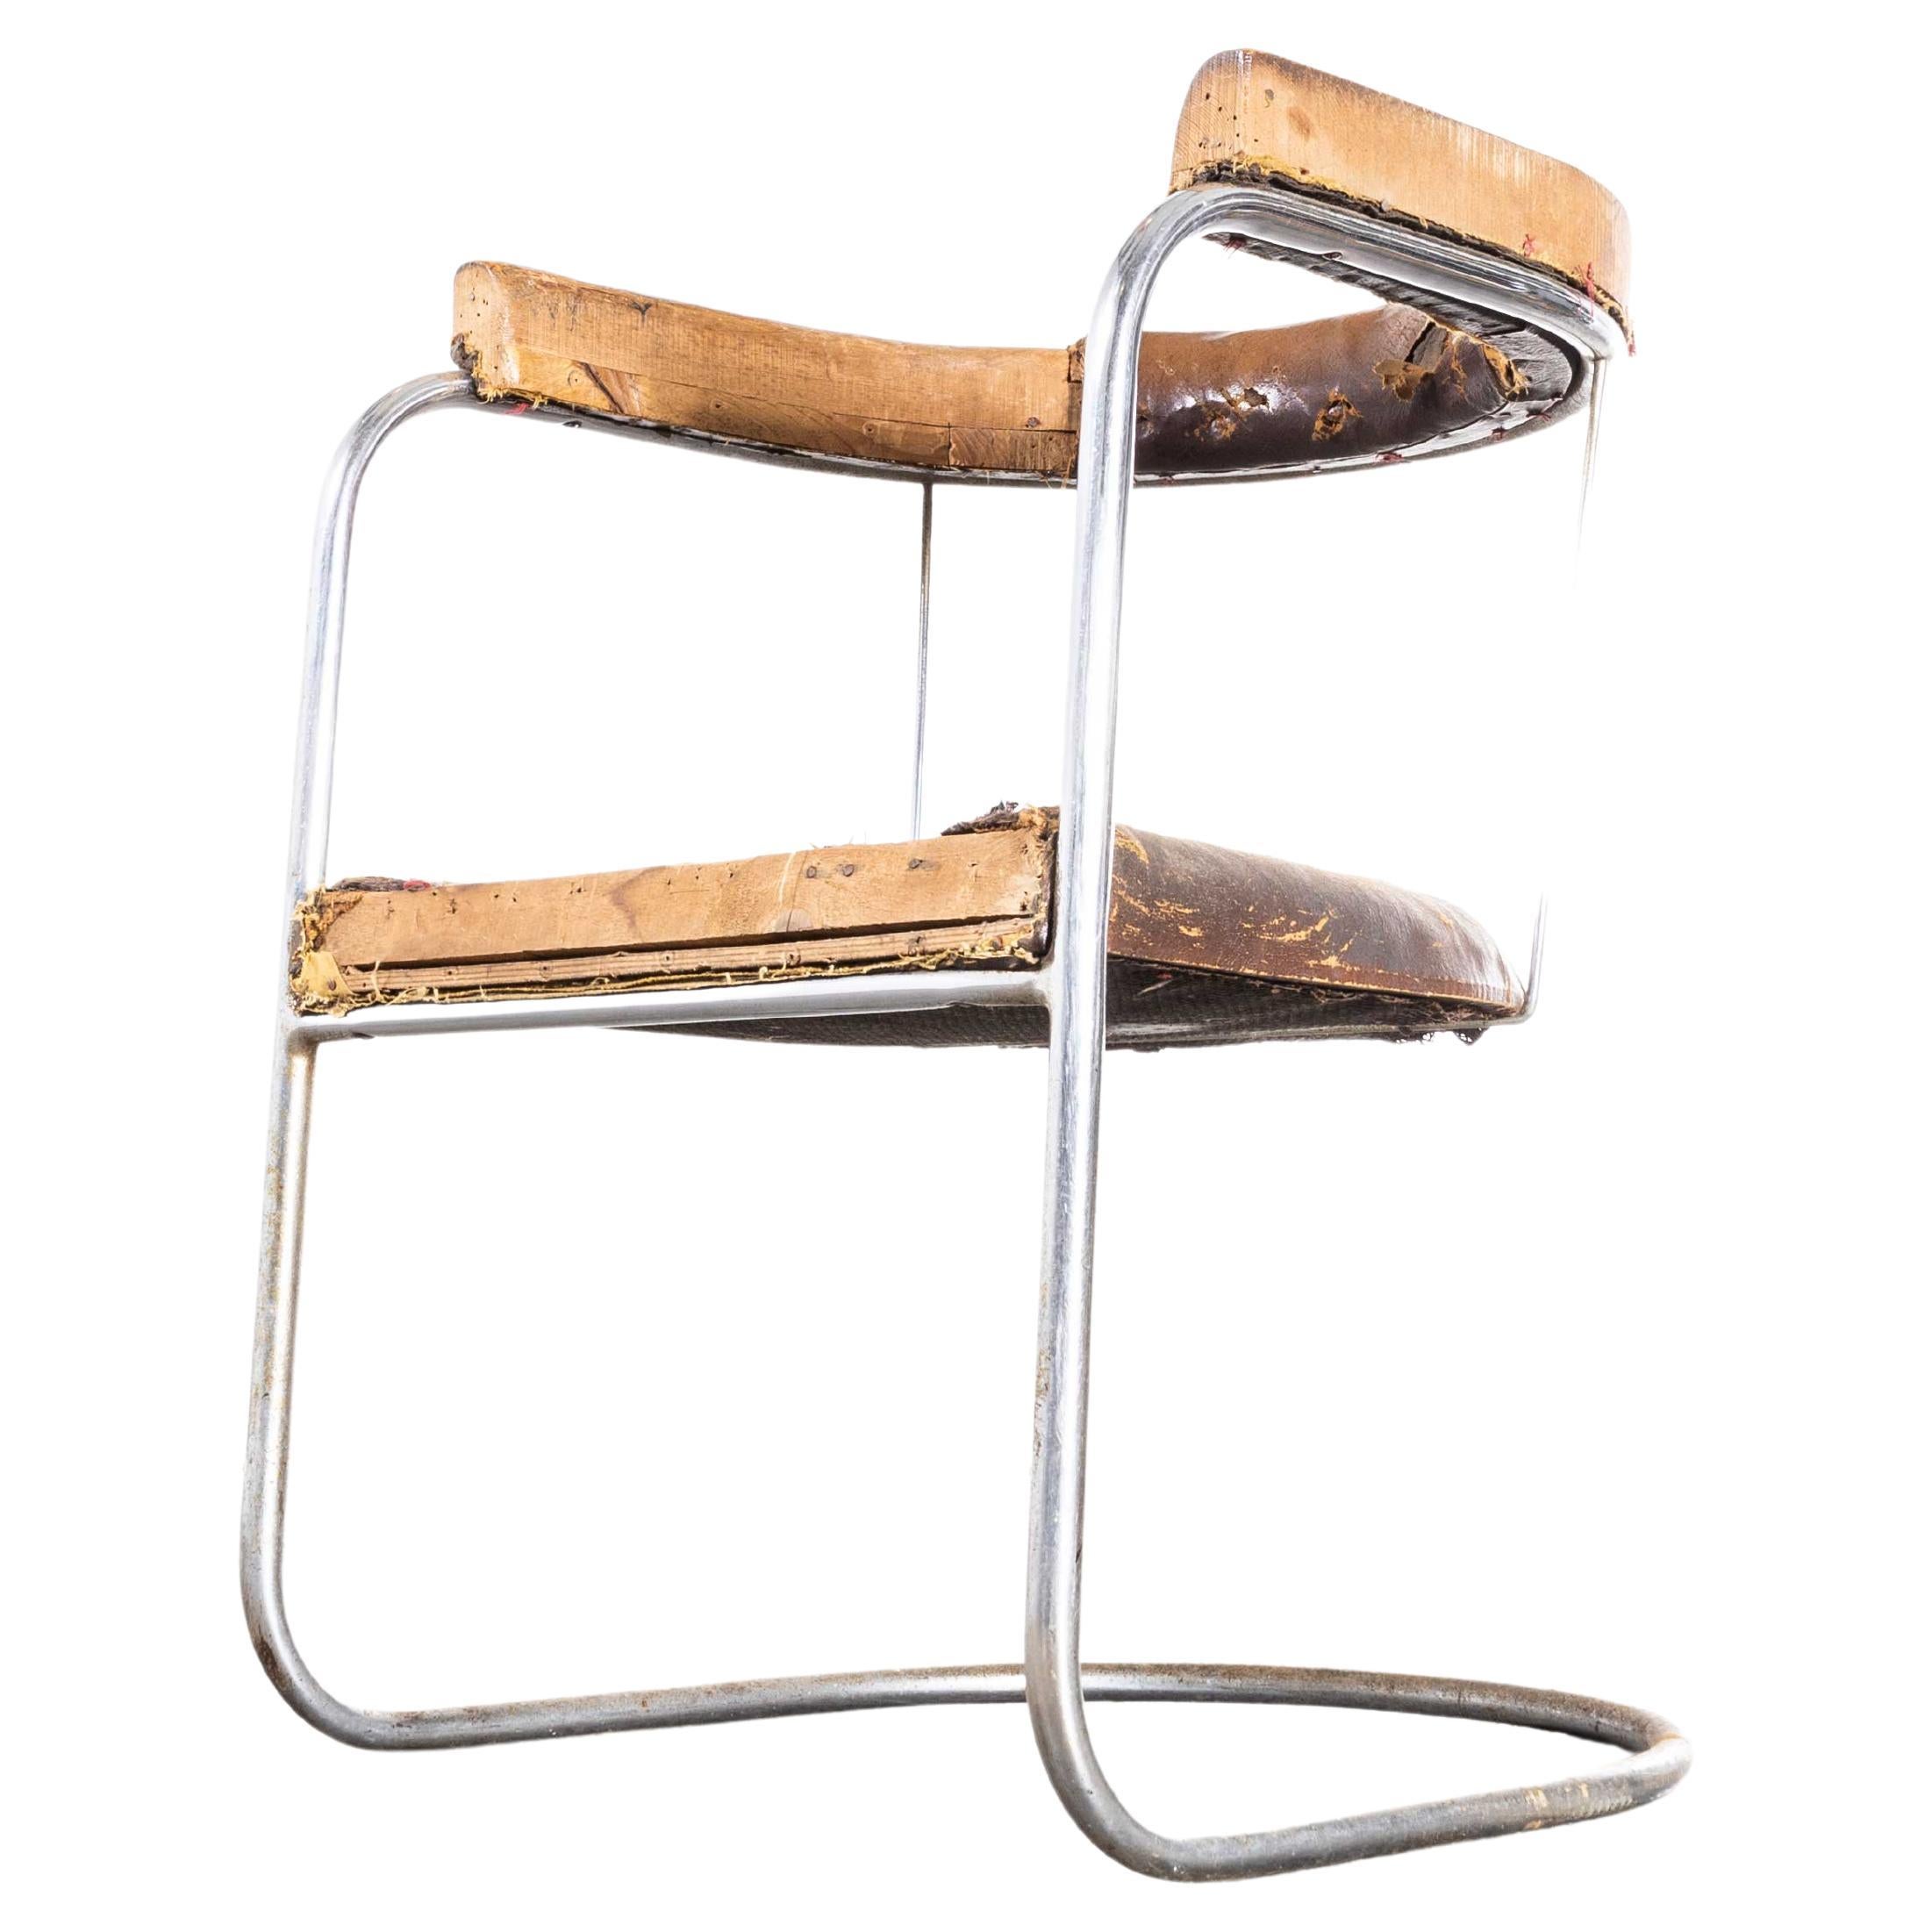 1930s Original Pel Tubular Chrome Sprung Side Chair – Original Leather